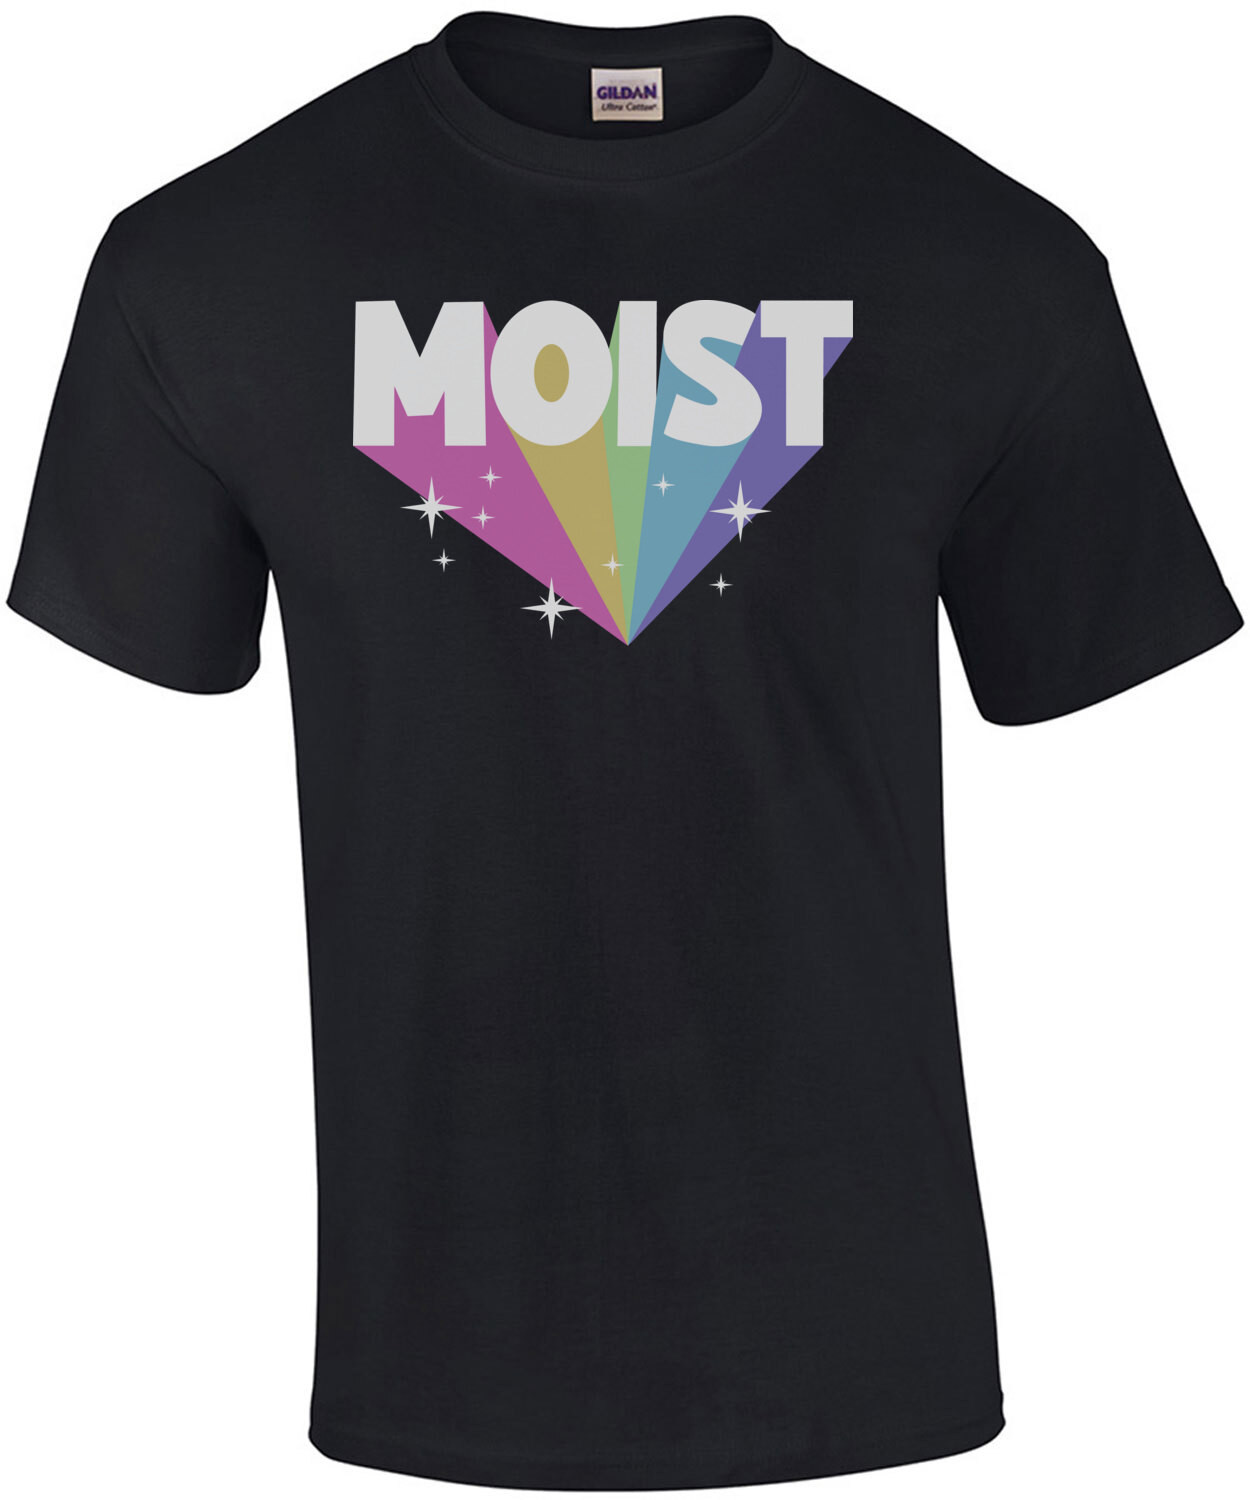 Moist - Funny Ladies T-Shirt